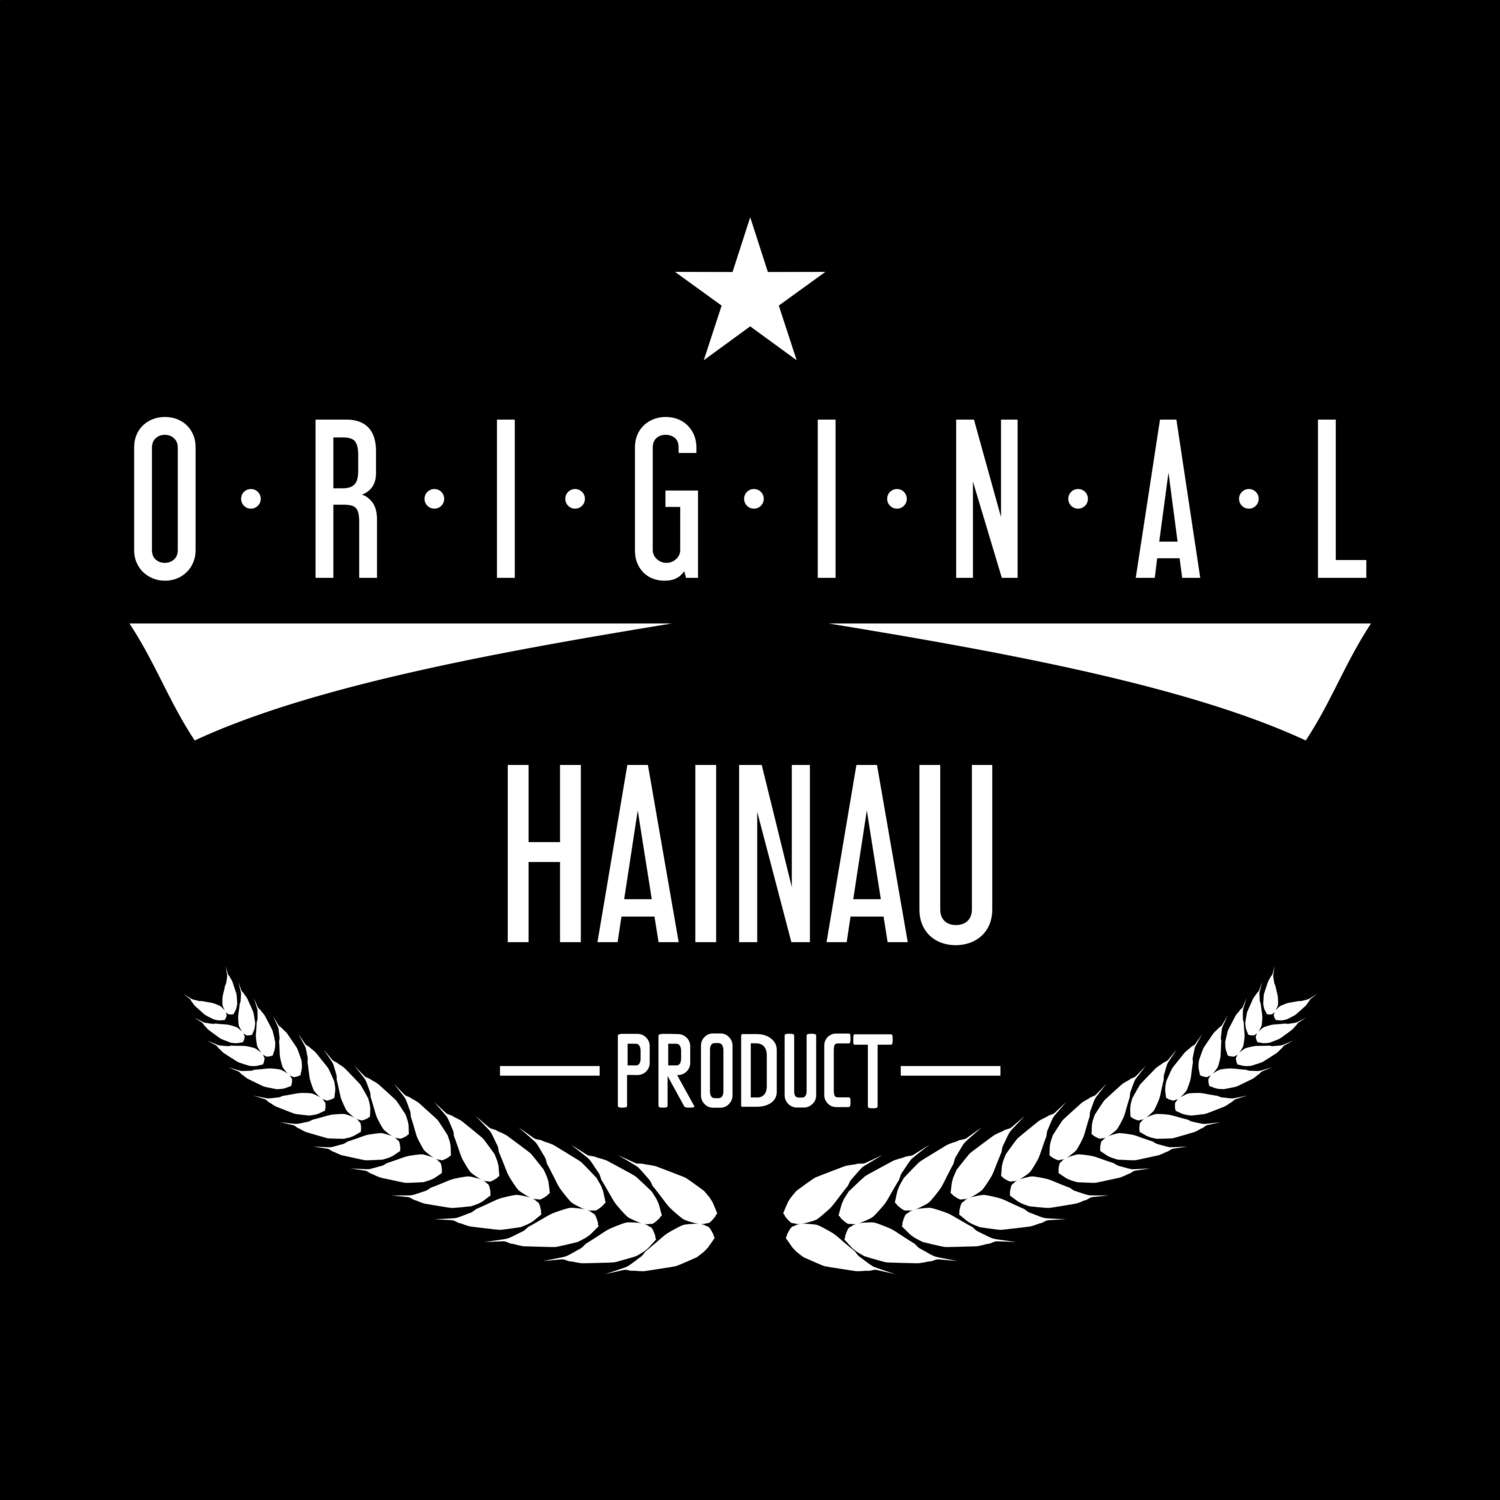 Hainau T-Shirt »Original Product«